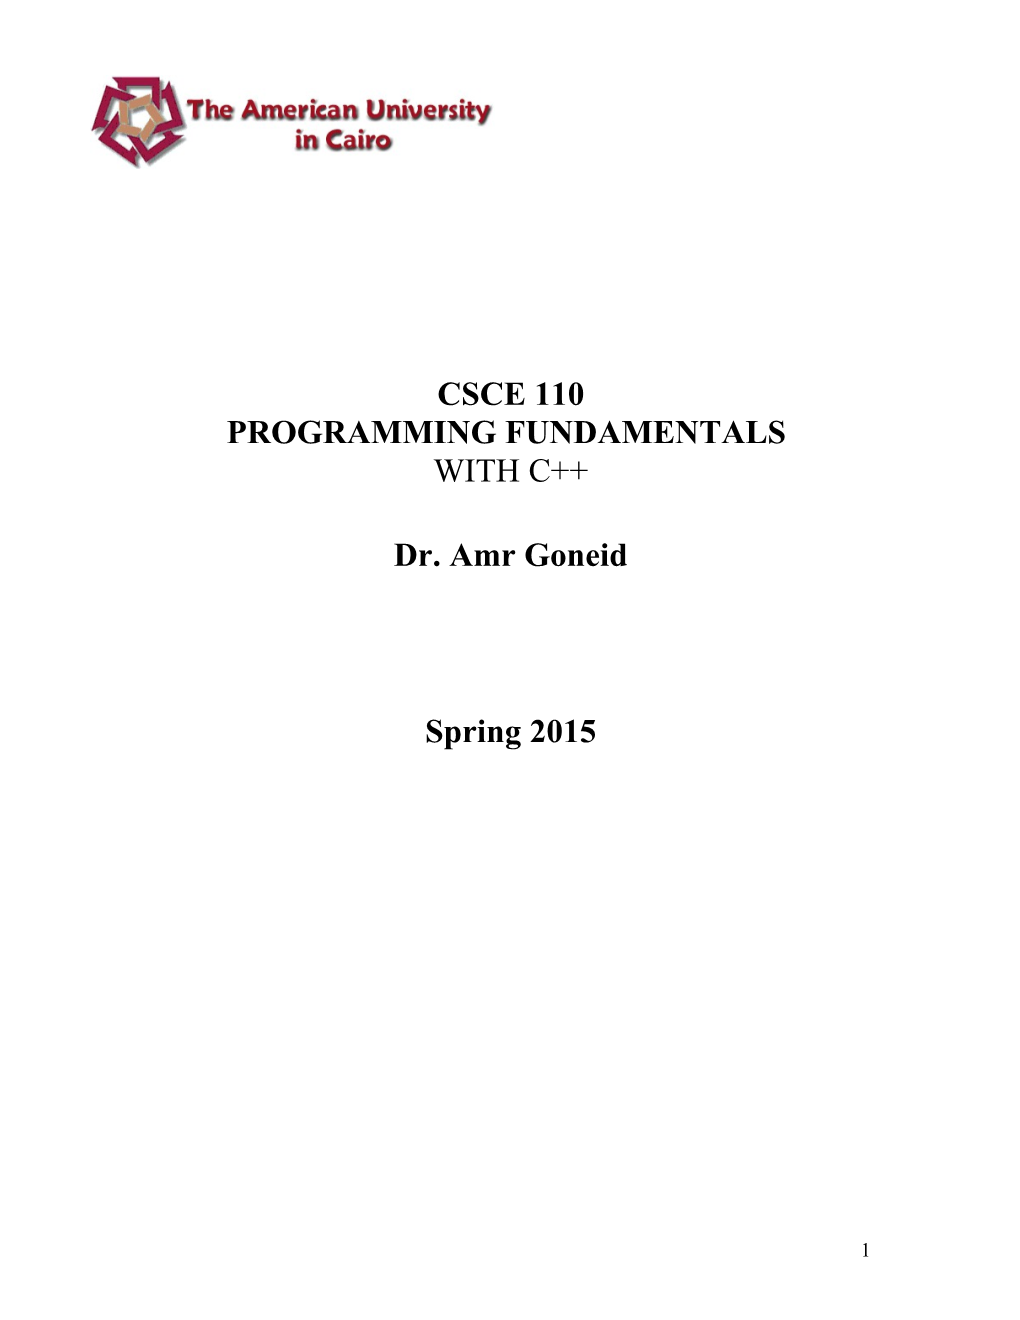 Csce 110 Programming Fundamentals with C